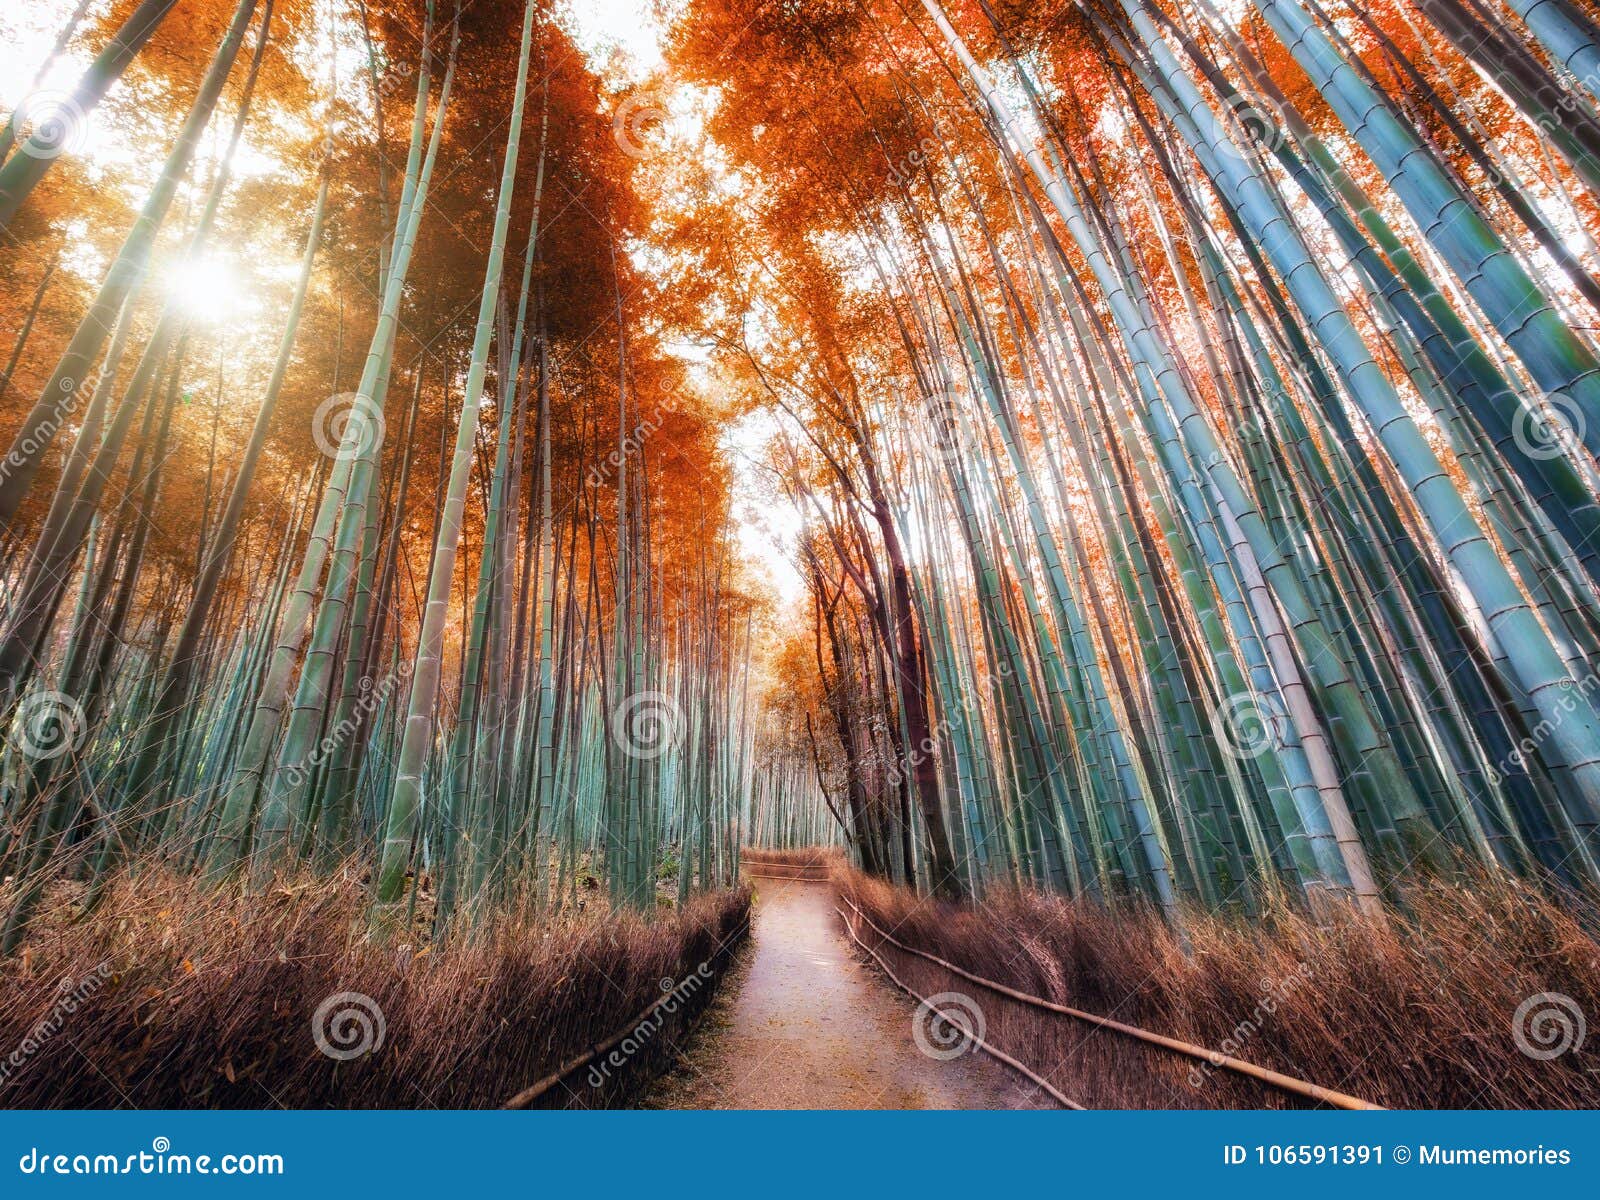 Walkway In Autumn Bamboo Forest Shady With Sunlight At Arashiyama Stock Image Image Of Ecology Culture